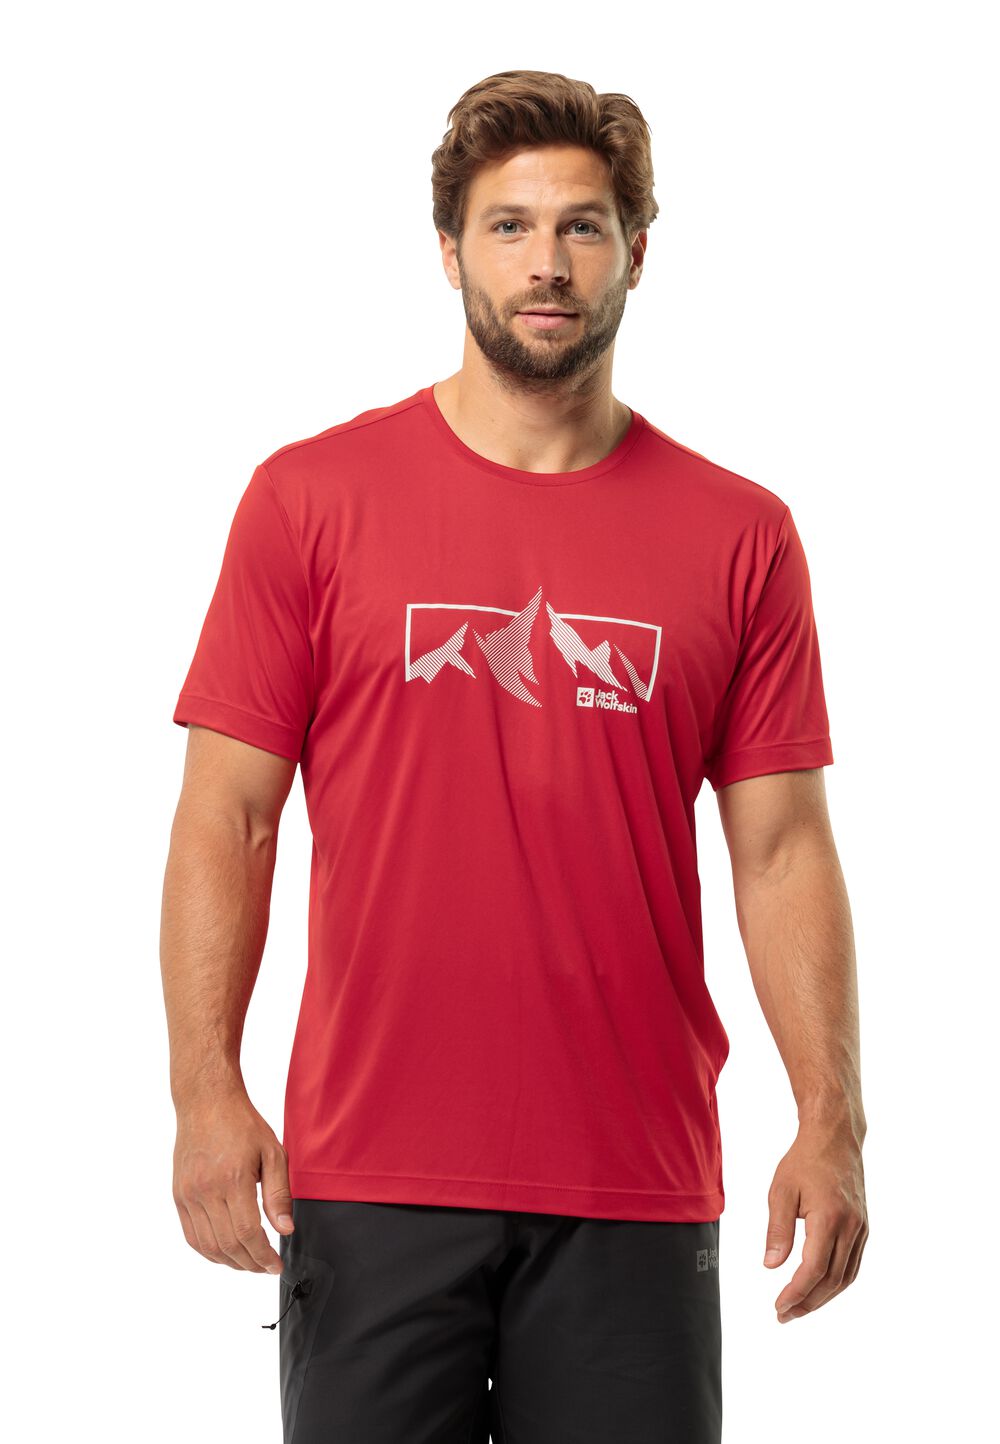 Jack Wolfskin Peak Graphic T-Shirt Men Functioneel shirt Heren S rood red glow